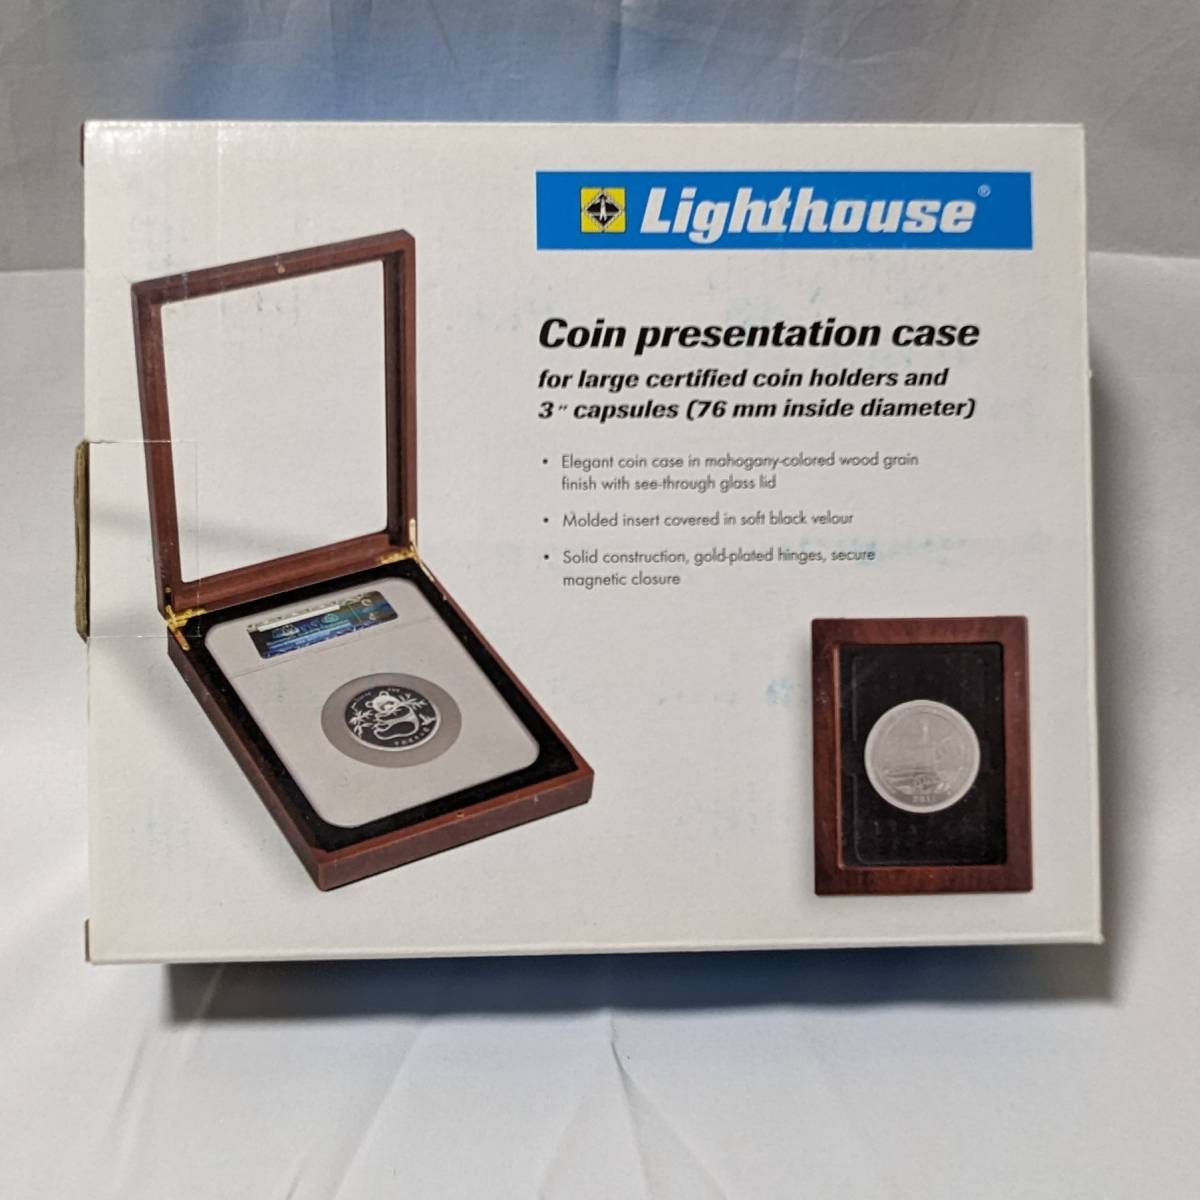 5 ounce NGC coin COINs Rav case gold coin silver coin wooden light house company manufactured 